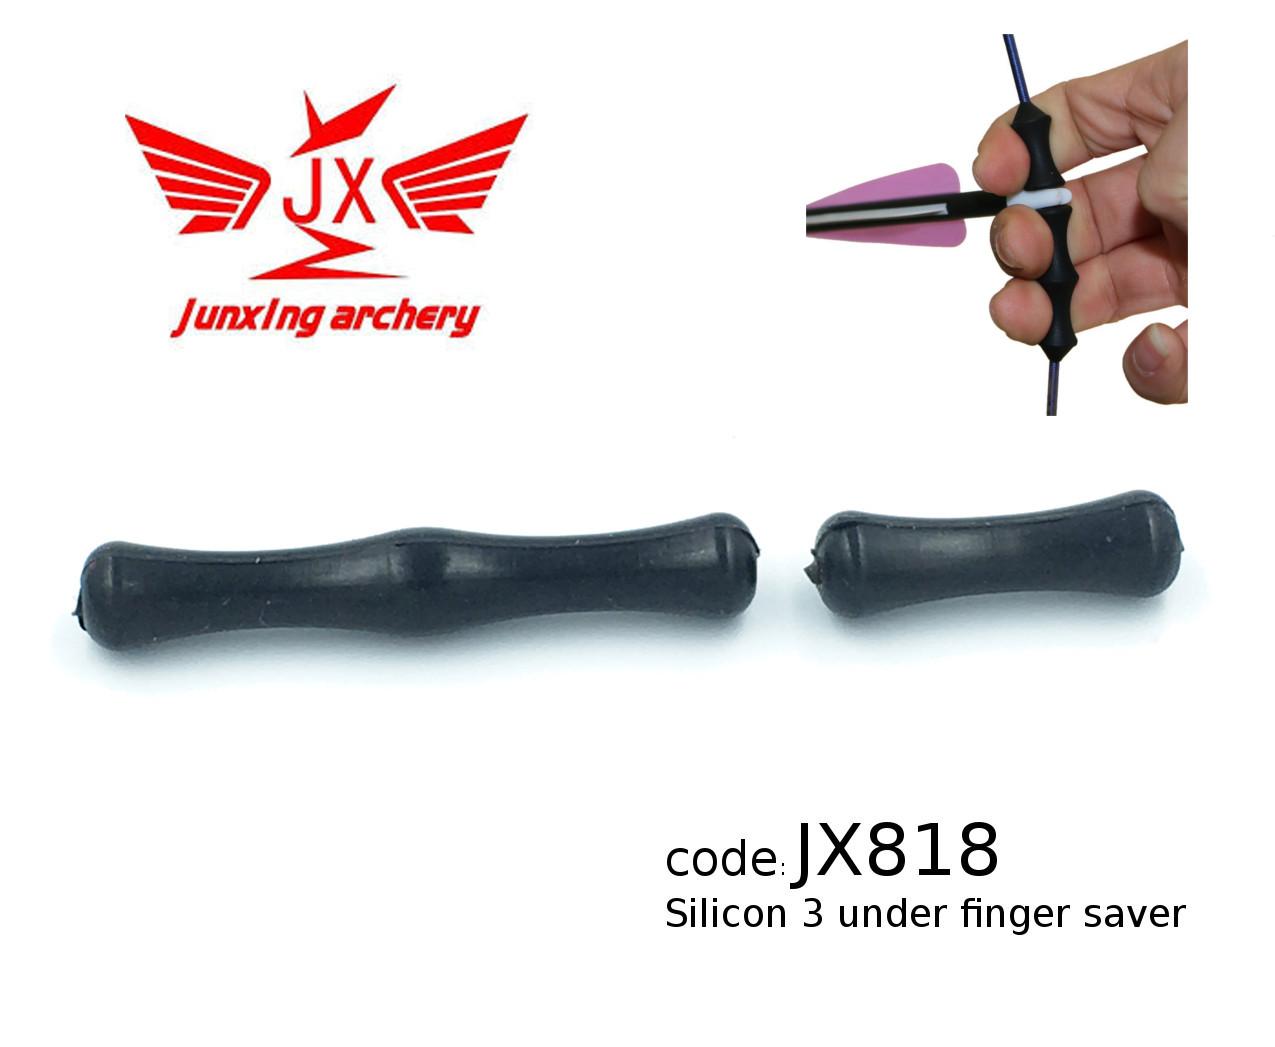 Junxing 3 Under Finger Saver. Silicone Black for adult. Code:JX818